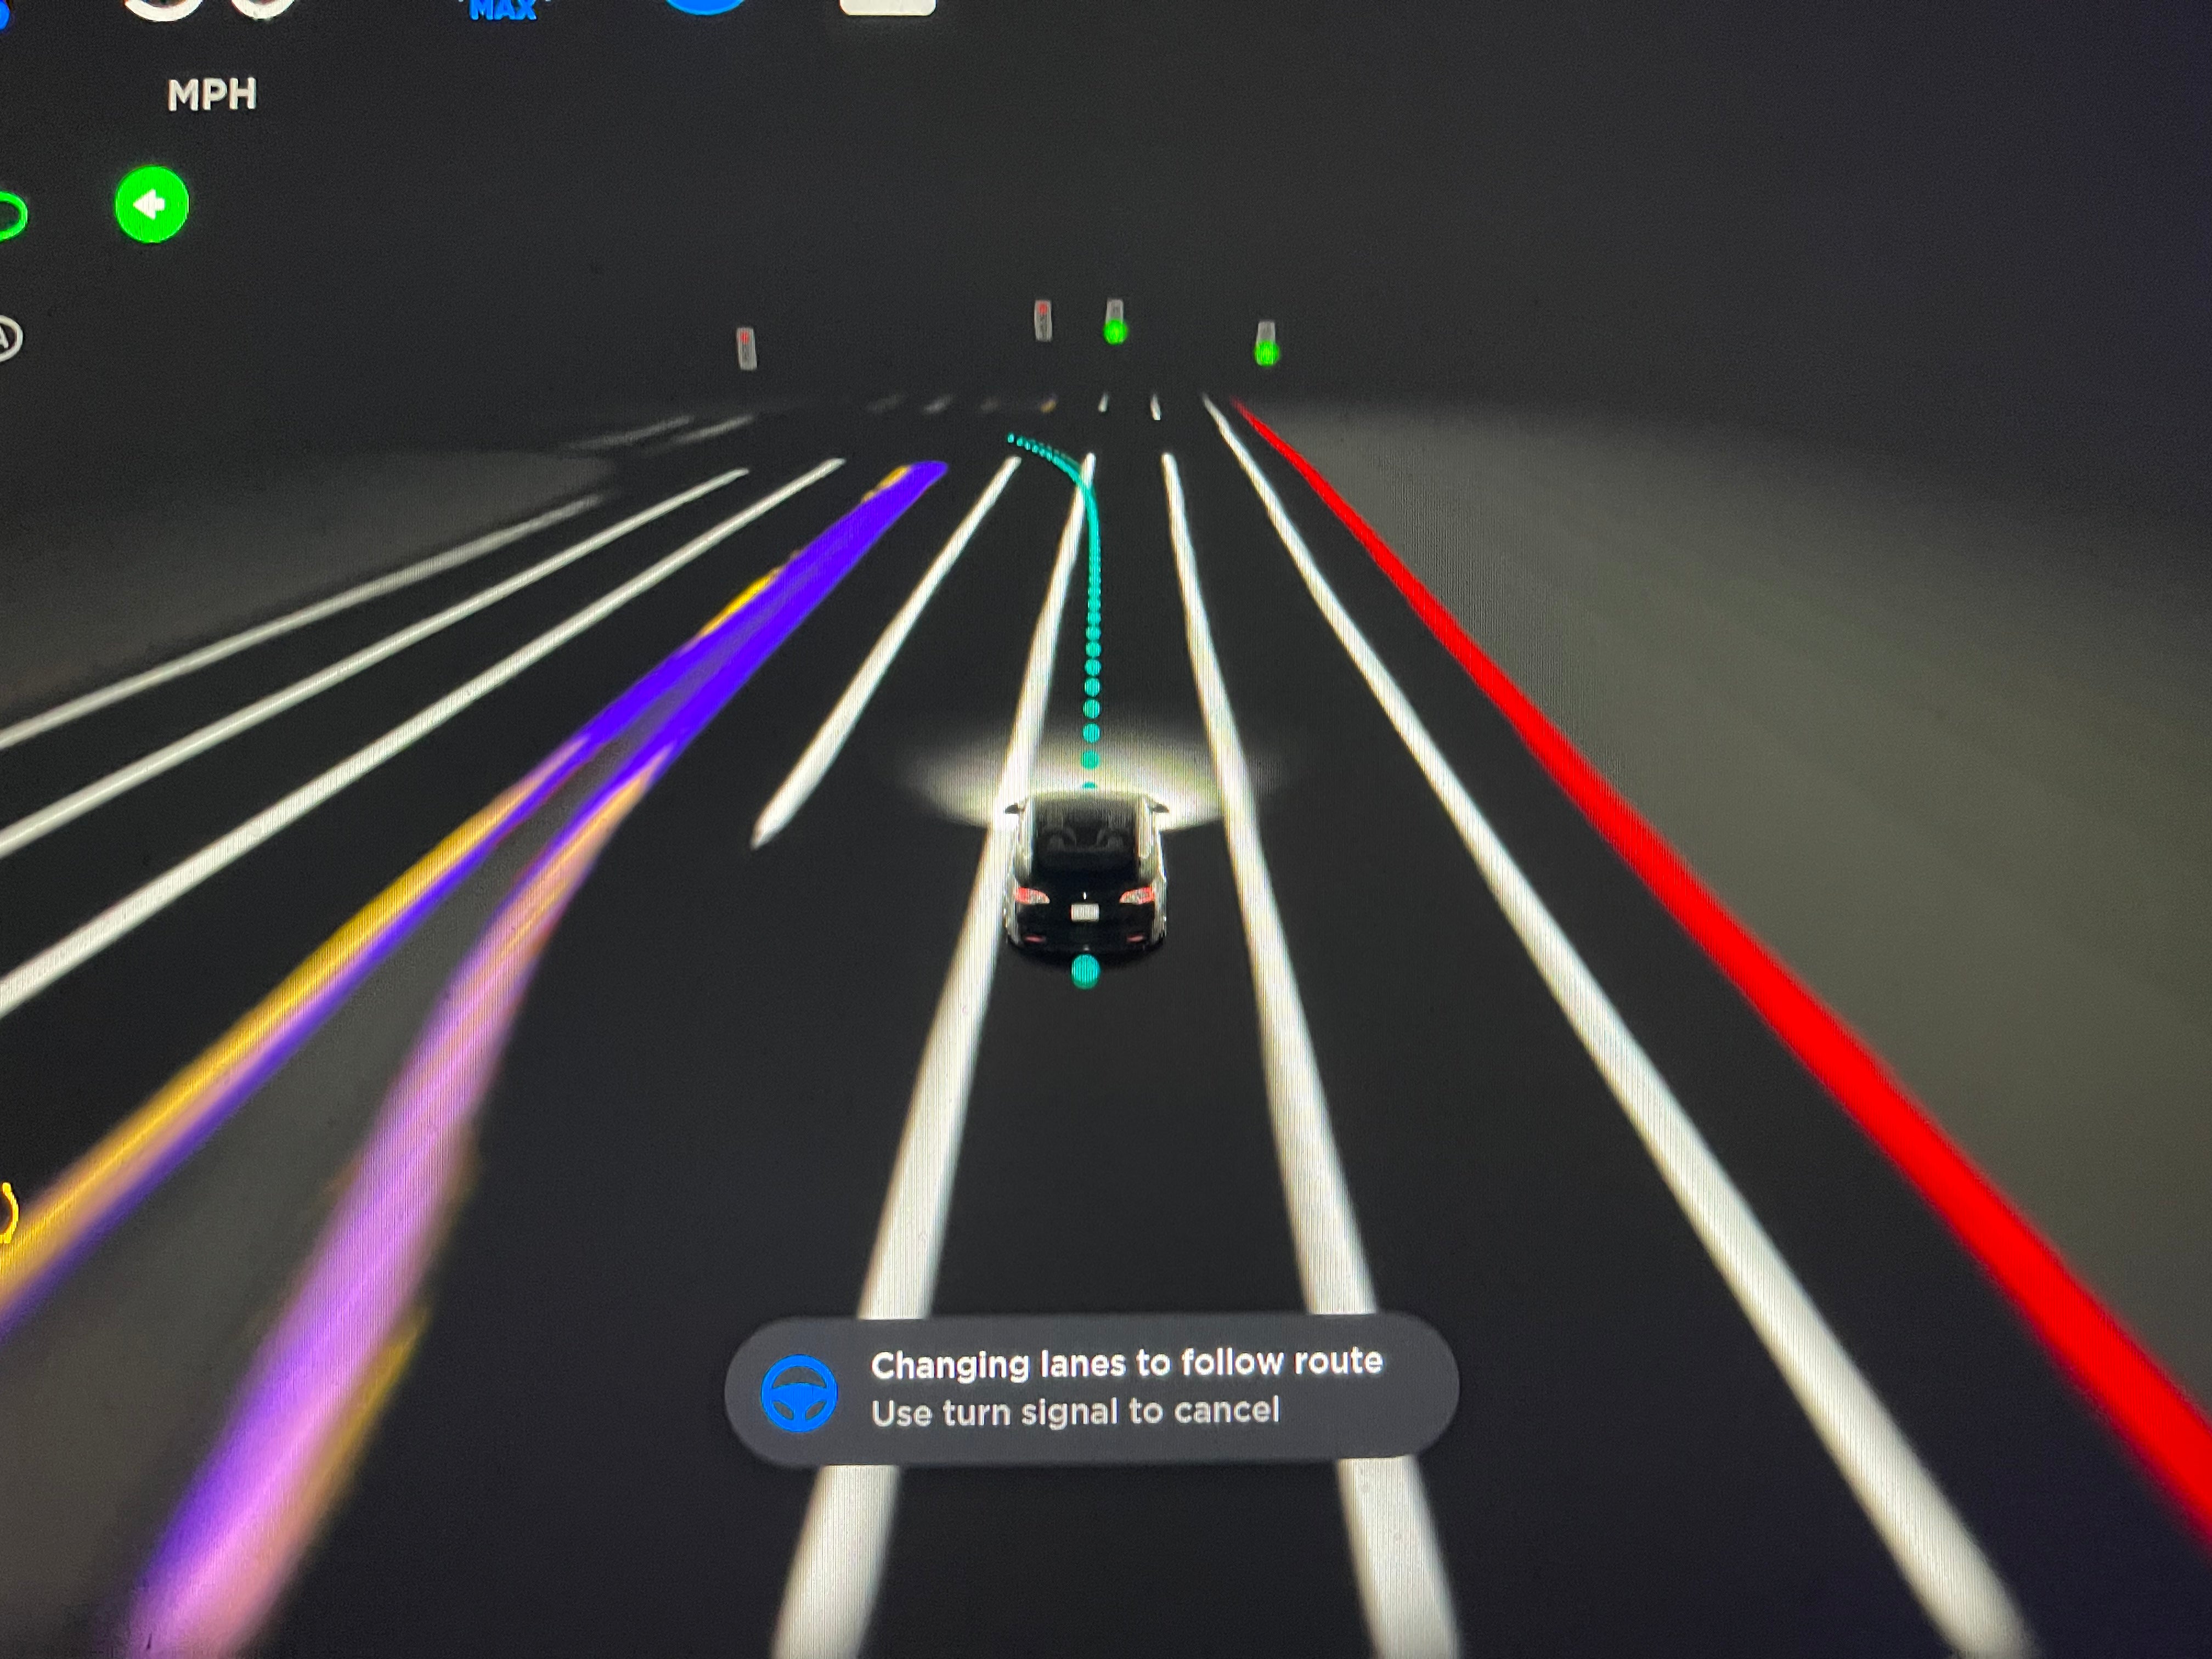 Tesla Distributed V9 Software for FSD Beta with Improved ‘mind of car’ UI Visualization